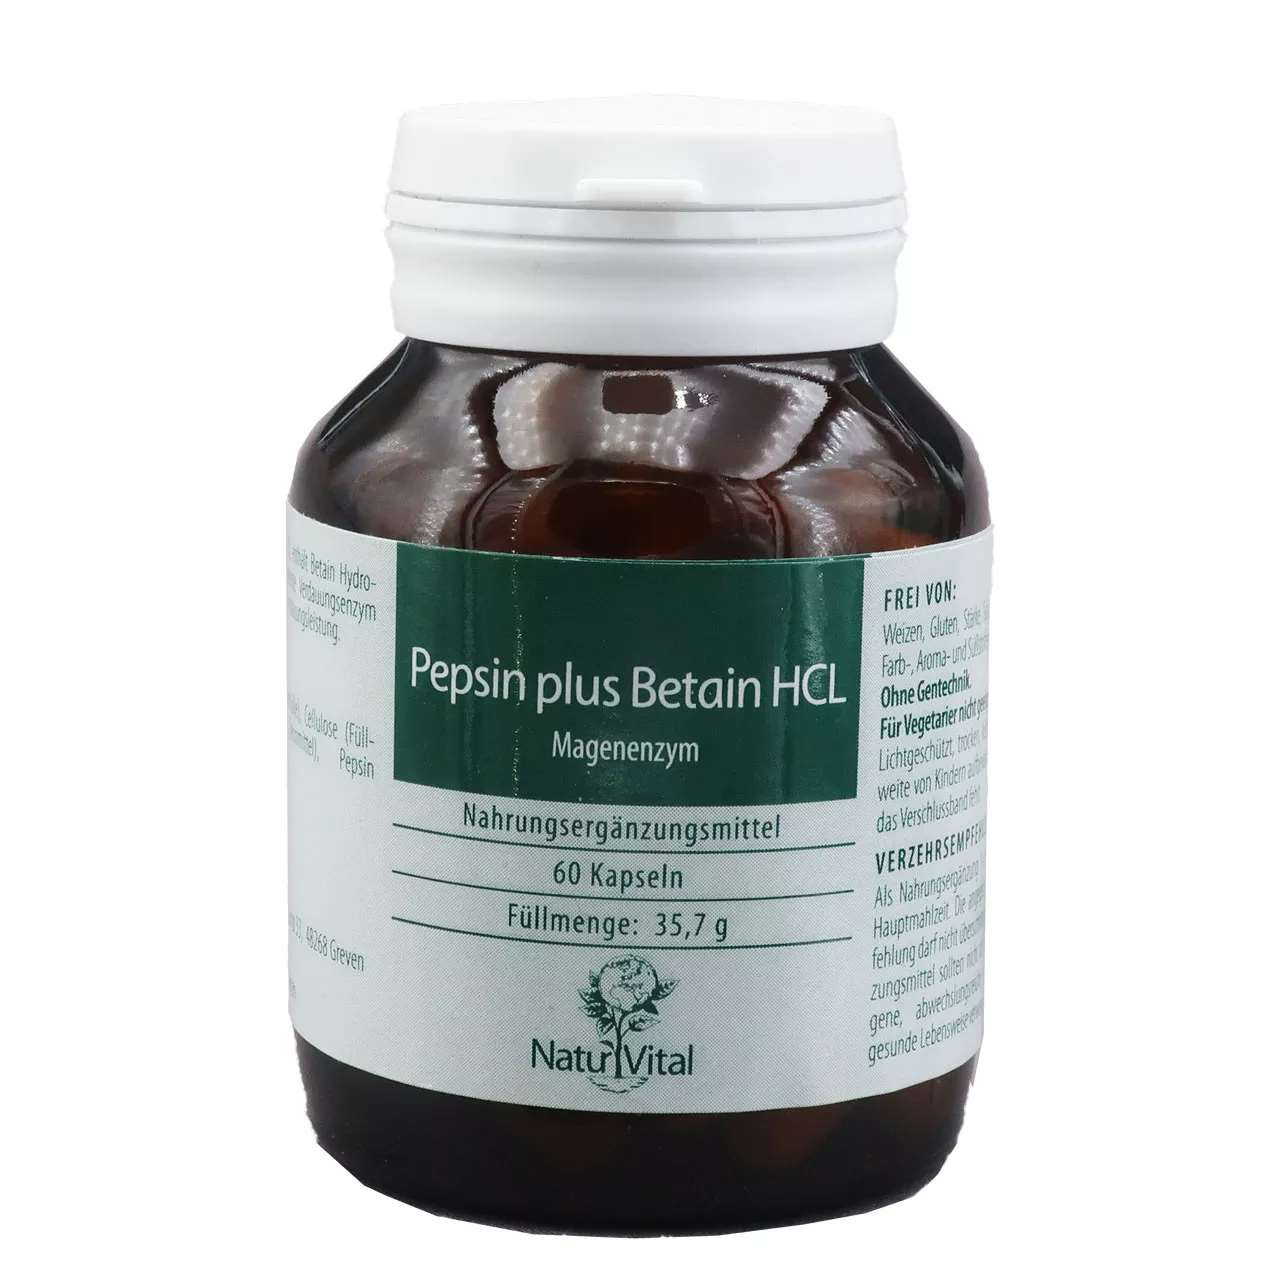 Pepsin plus Betain HCL von Natur Vital beinhaltet 60 Kapseln